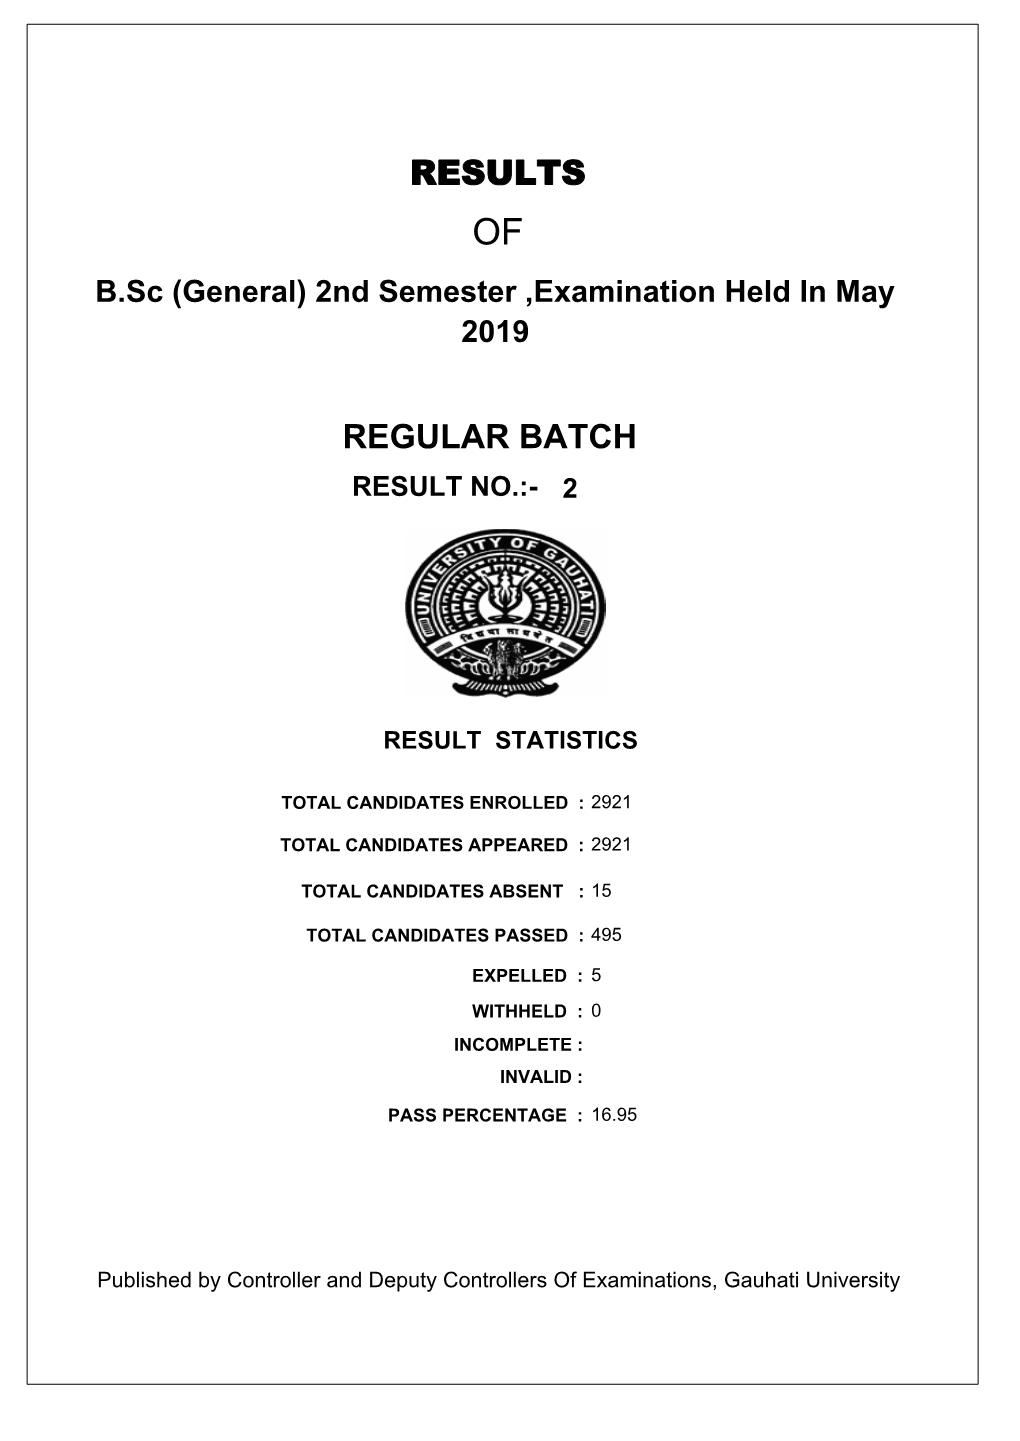 B.Sc (General) 2Nd Semester ,Examination Held in May 2019